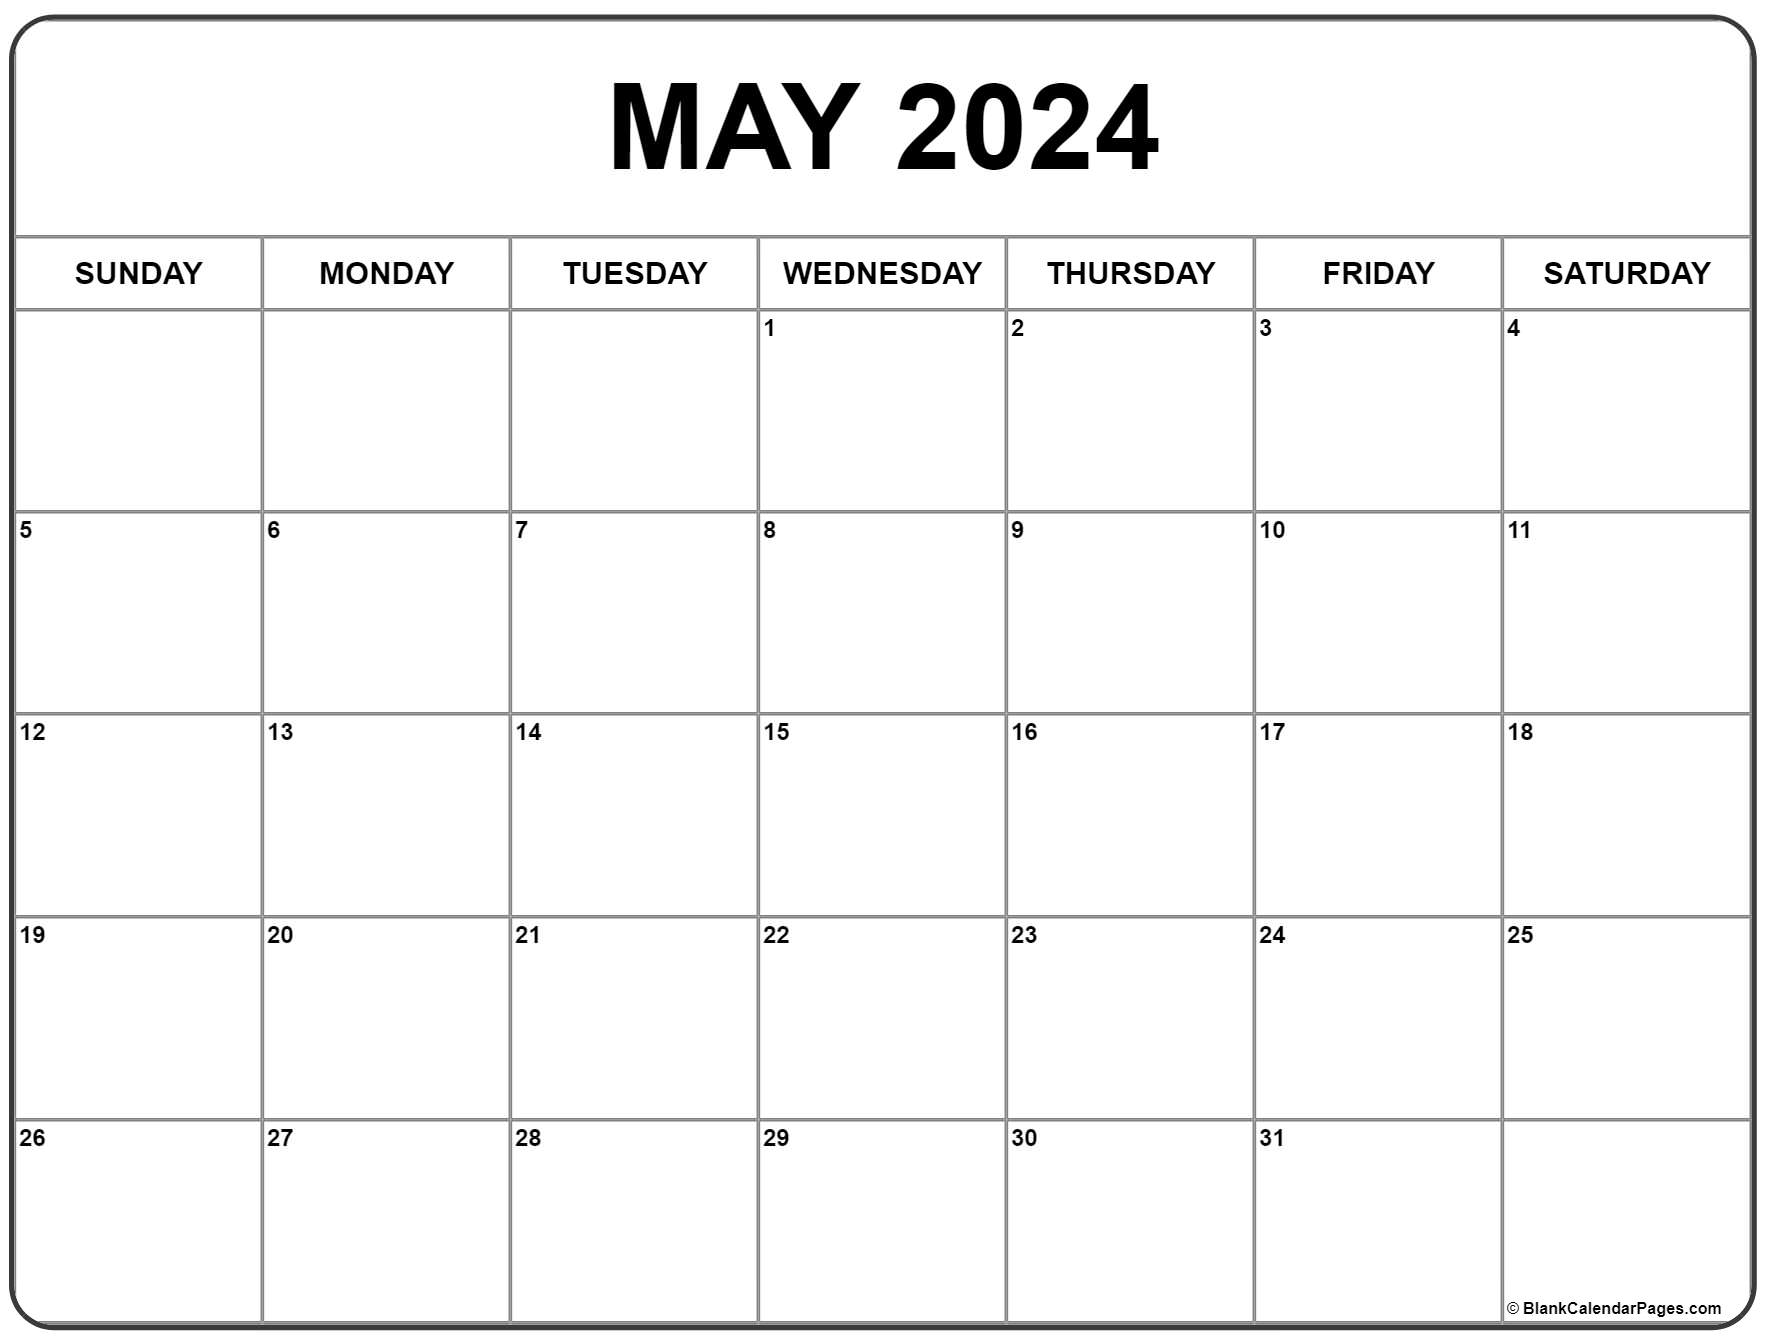 May 2024 Calendar | Free Printable Calendar for May 2024 Calendar Free Printable